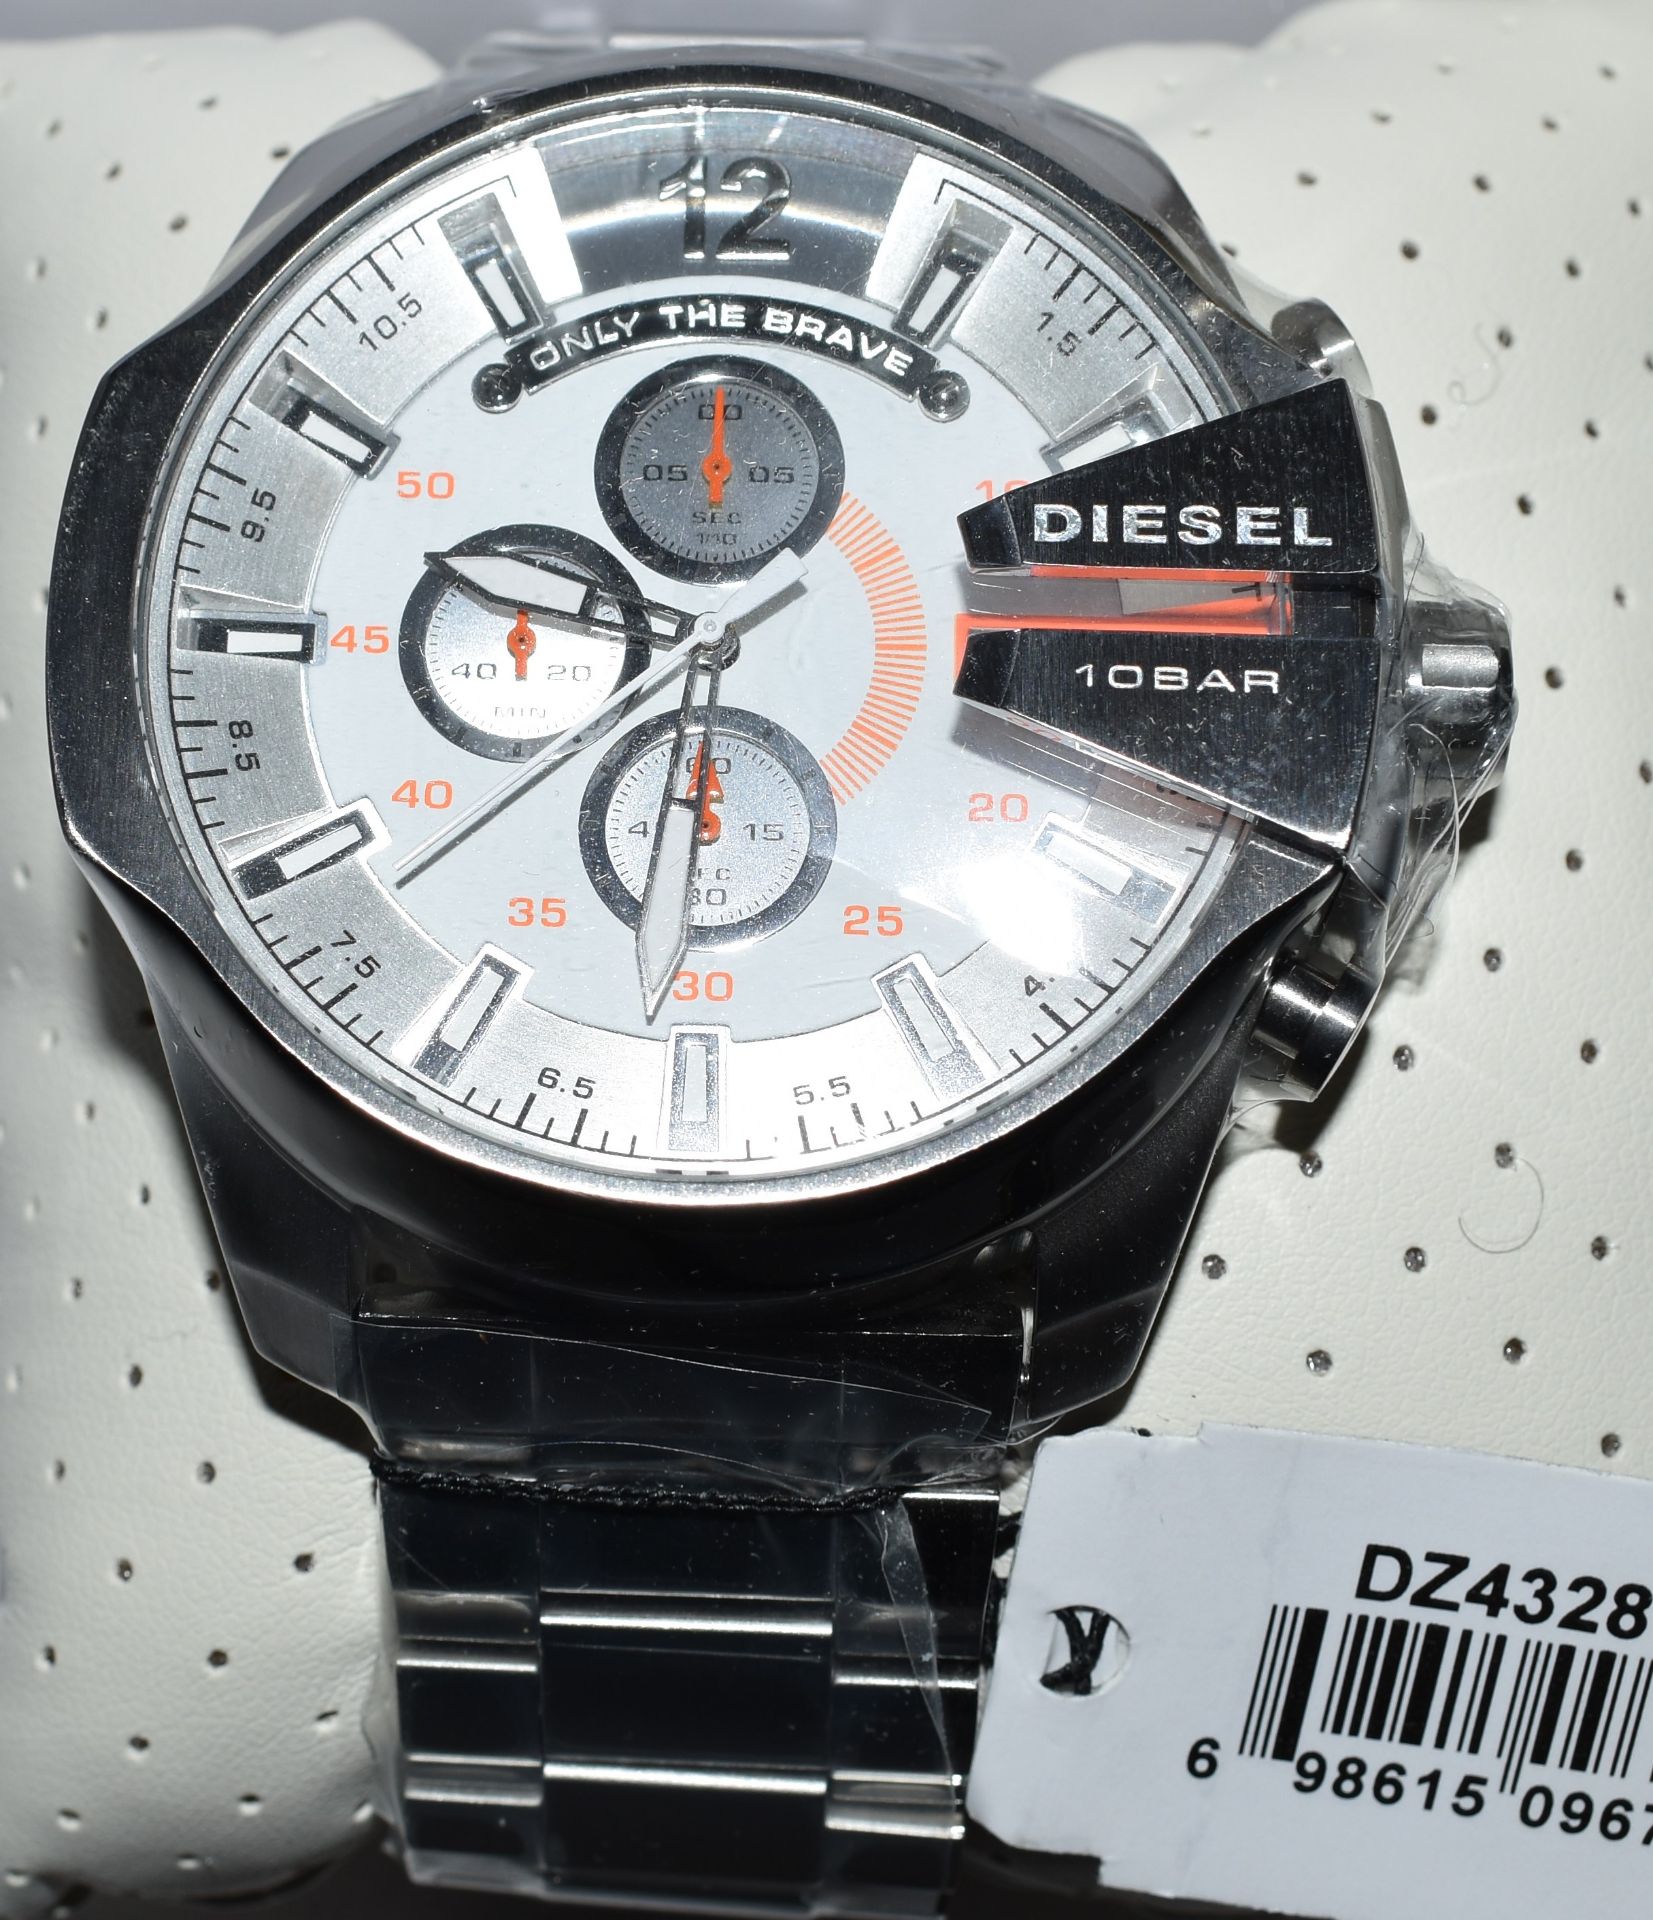 Diesel Men's Watch DZ4328 - Image 3 of 3